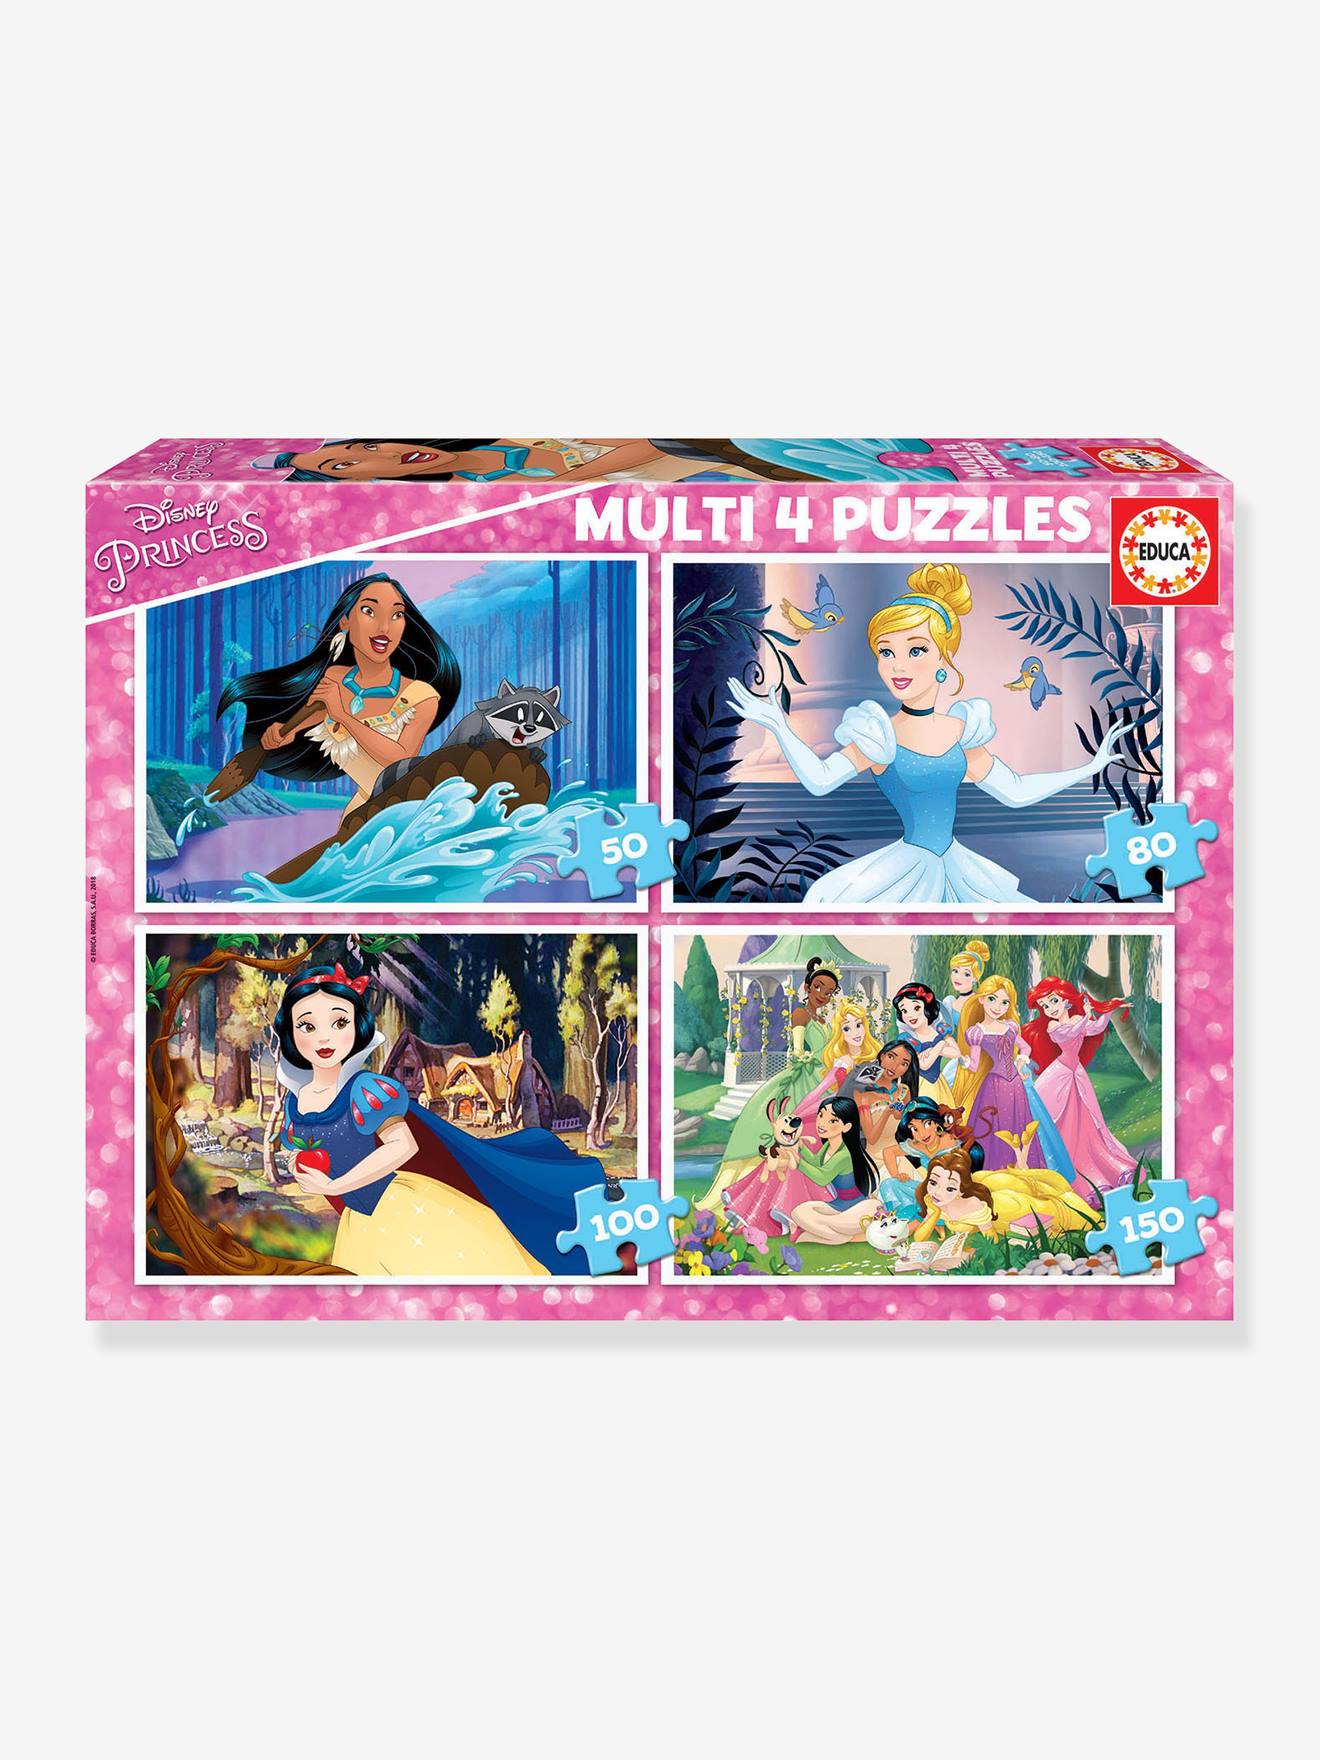 Set of 4 Progressive Puzzles, 50 to 150 Pieces, Disney(r) Princesses, by EDUCA pink